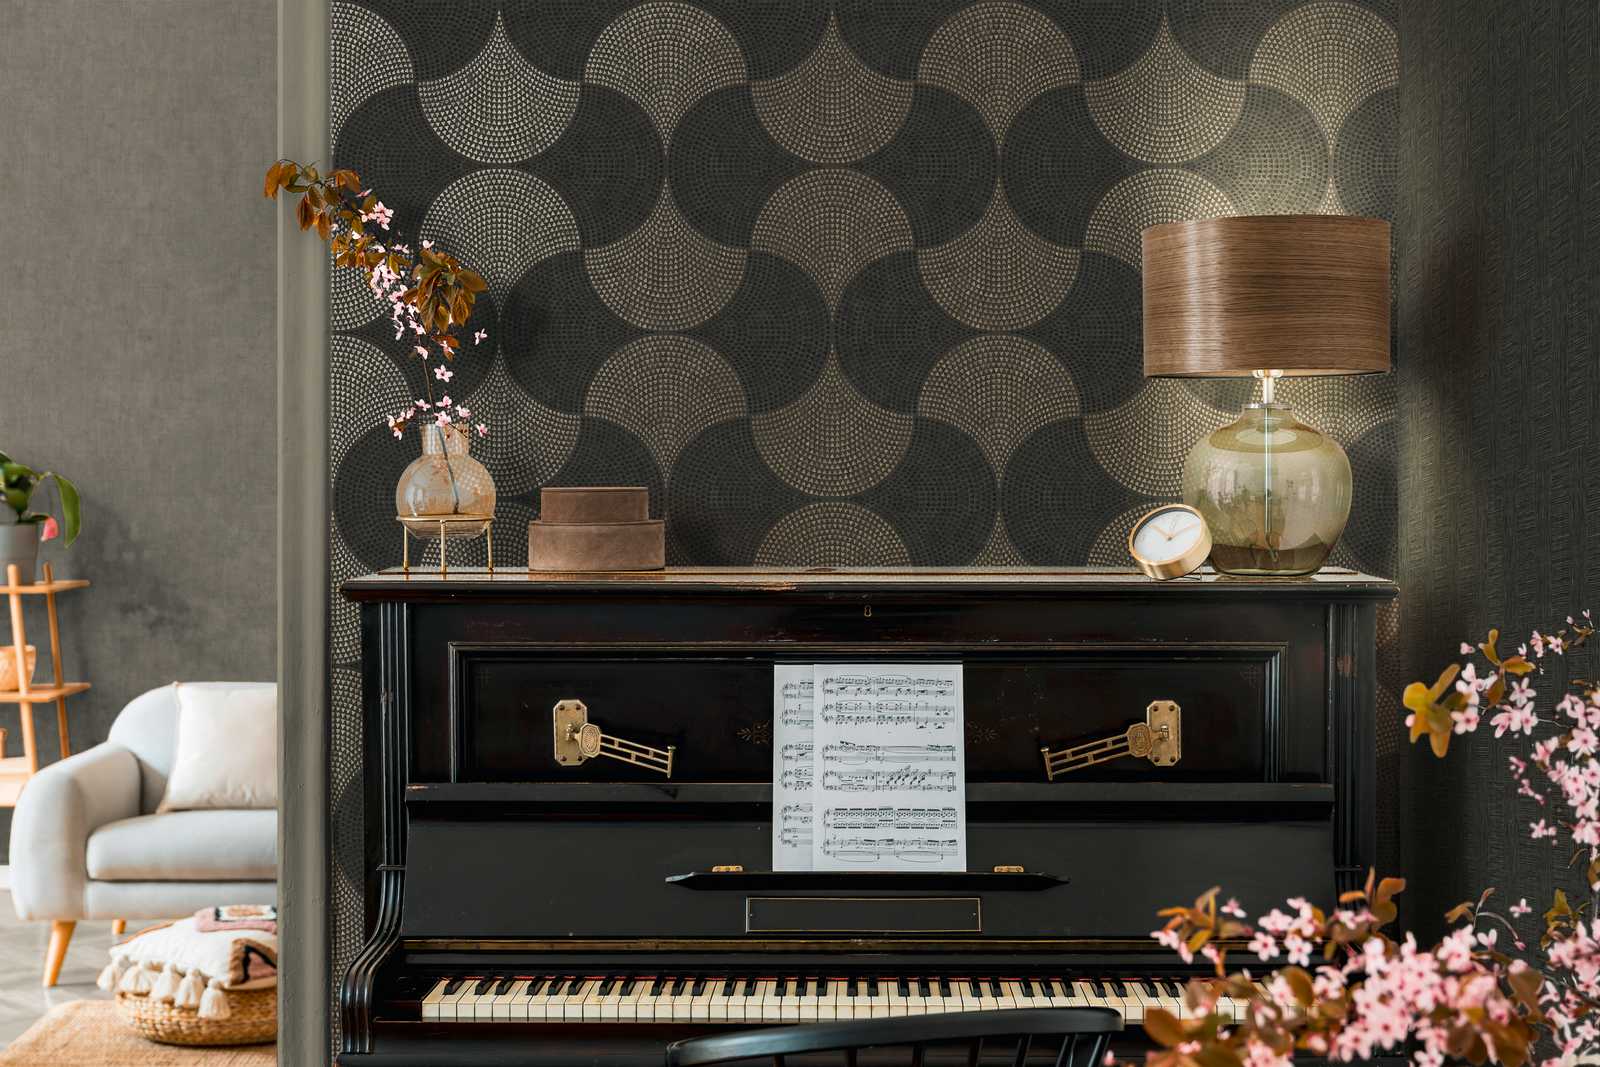             Wallpaper mosaic pattern with metallic effect & used look - grey, metallic
        